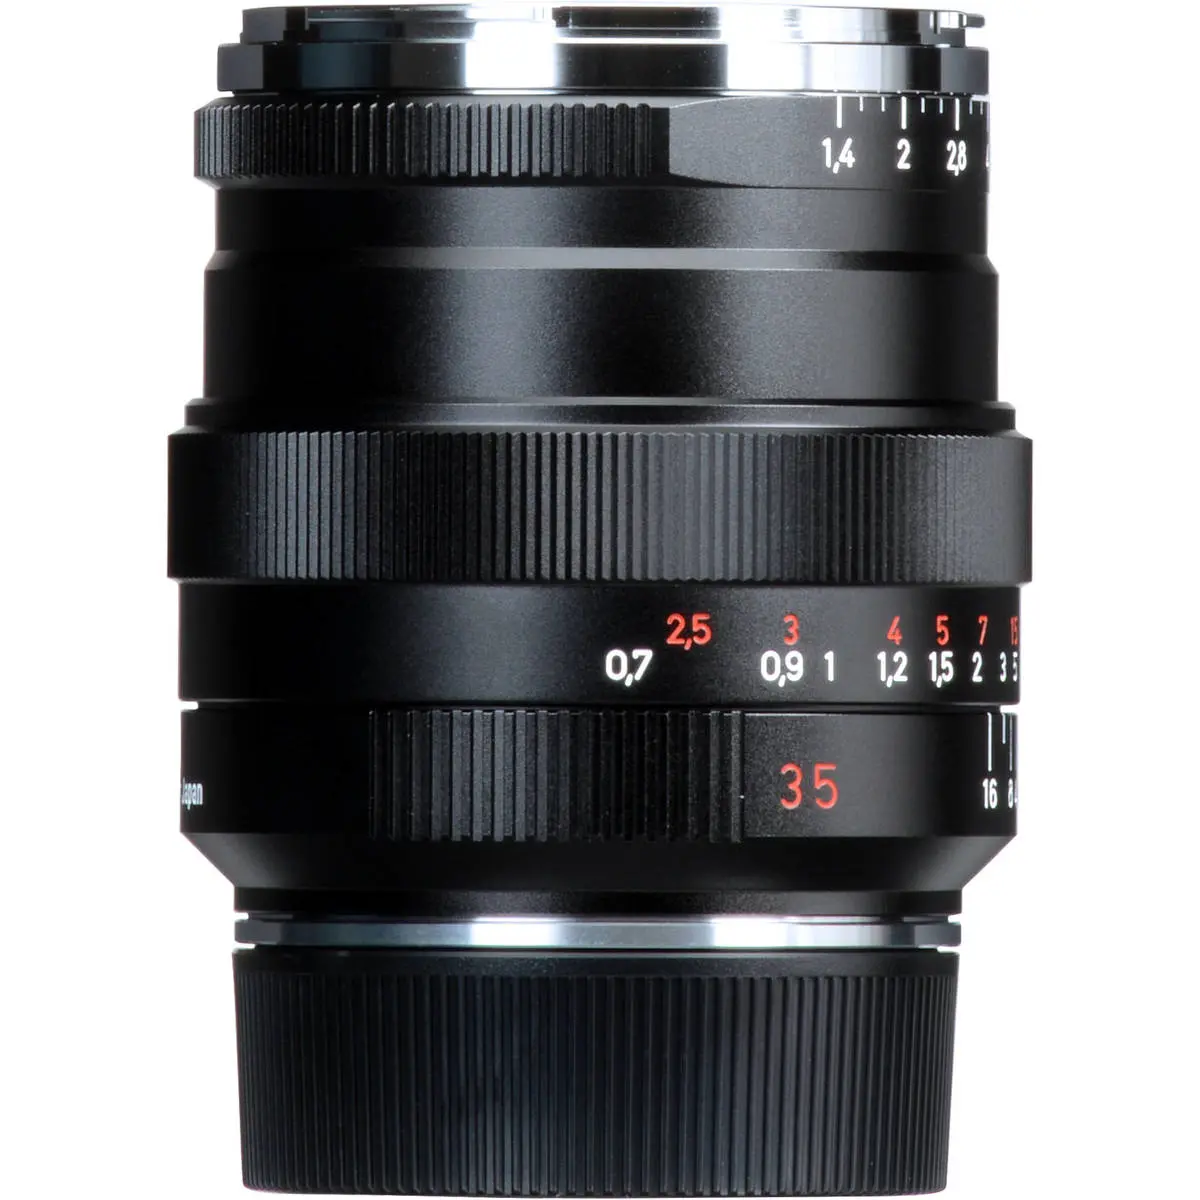 7. Carl Zeiss Distagon T* 35mm f/1.4 ZM Lens (Black) Lens